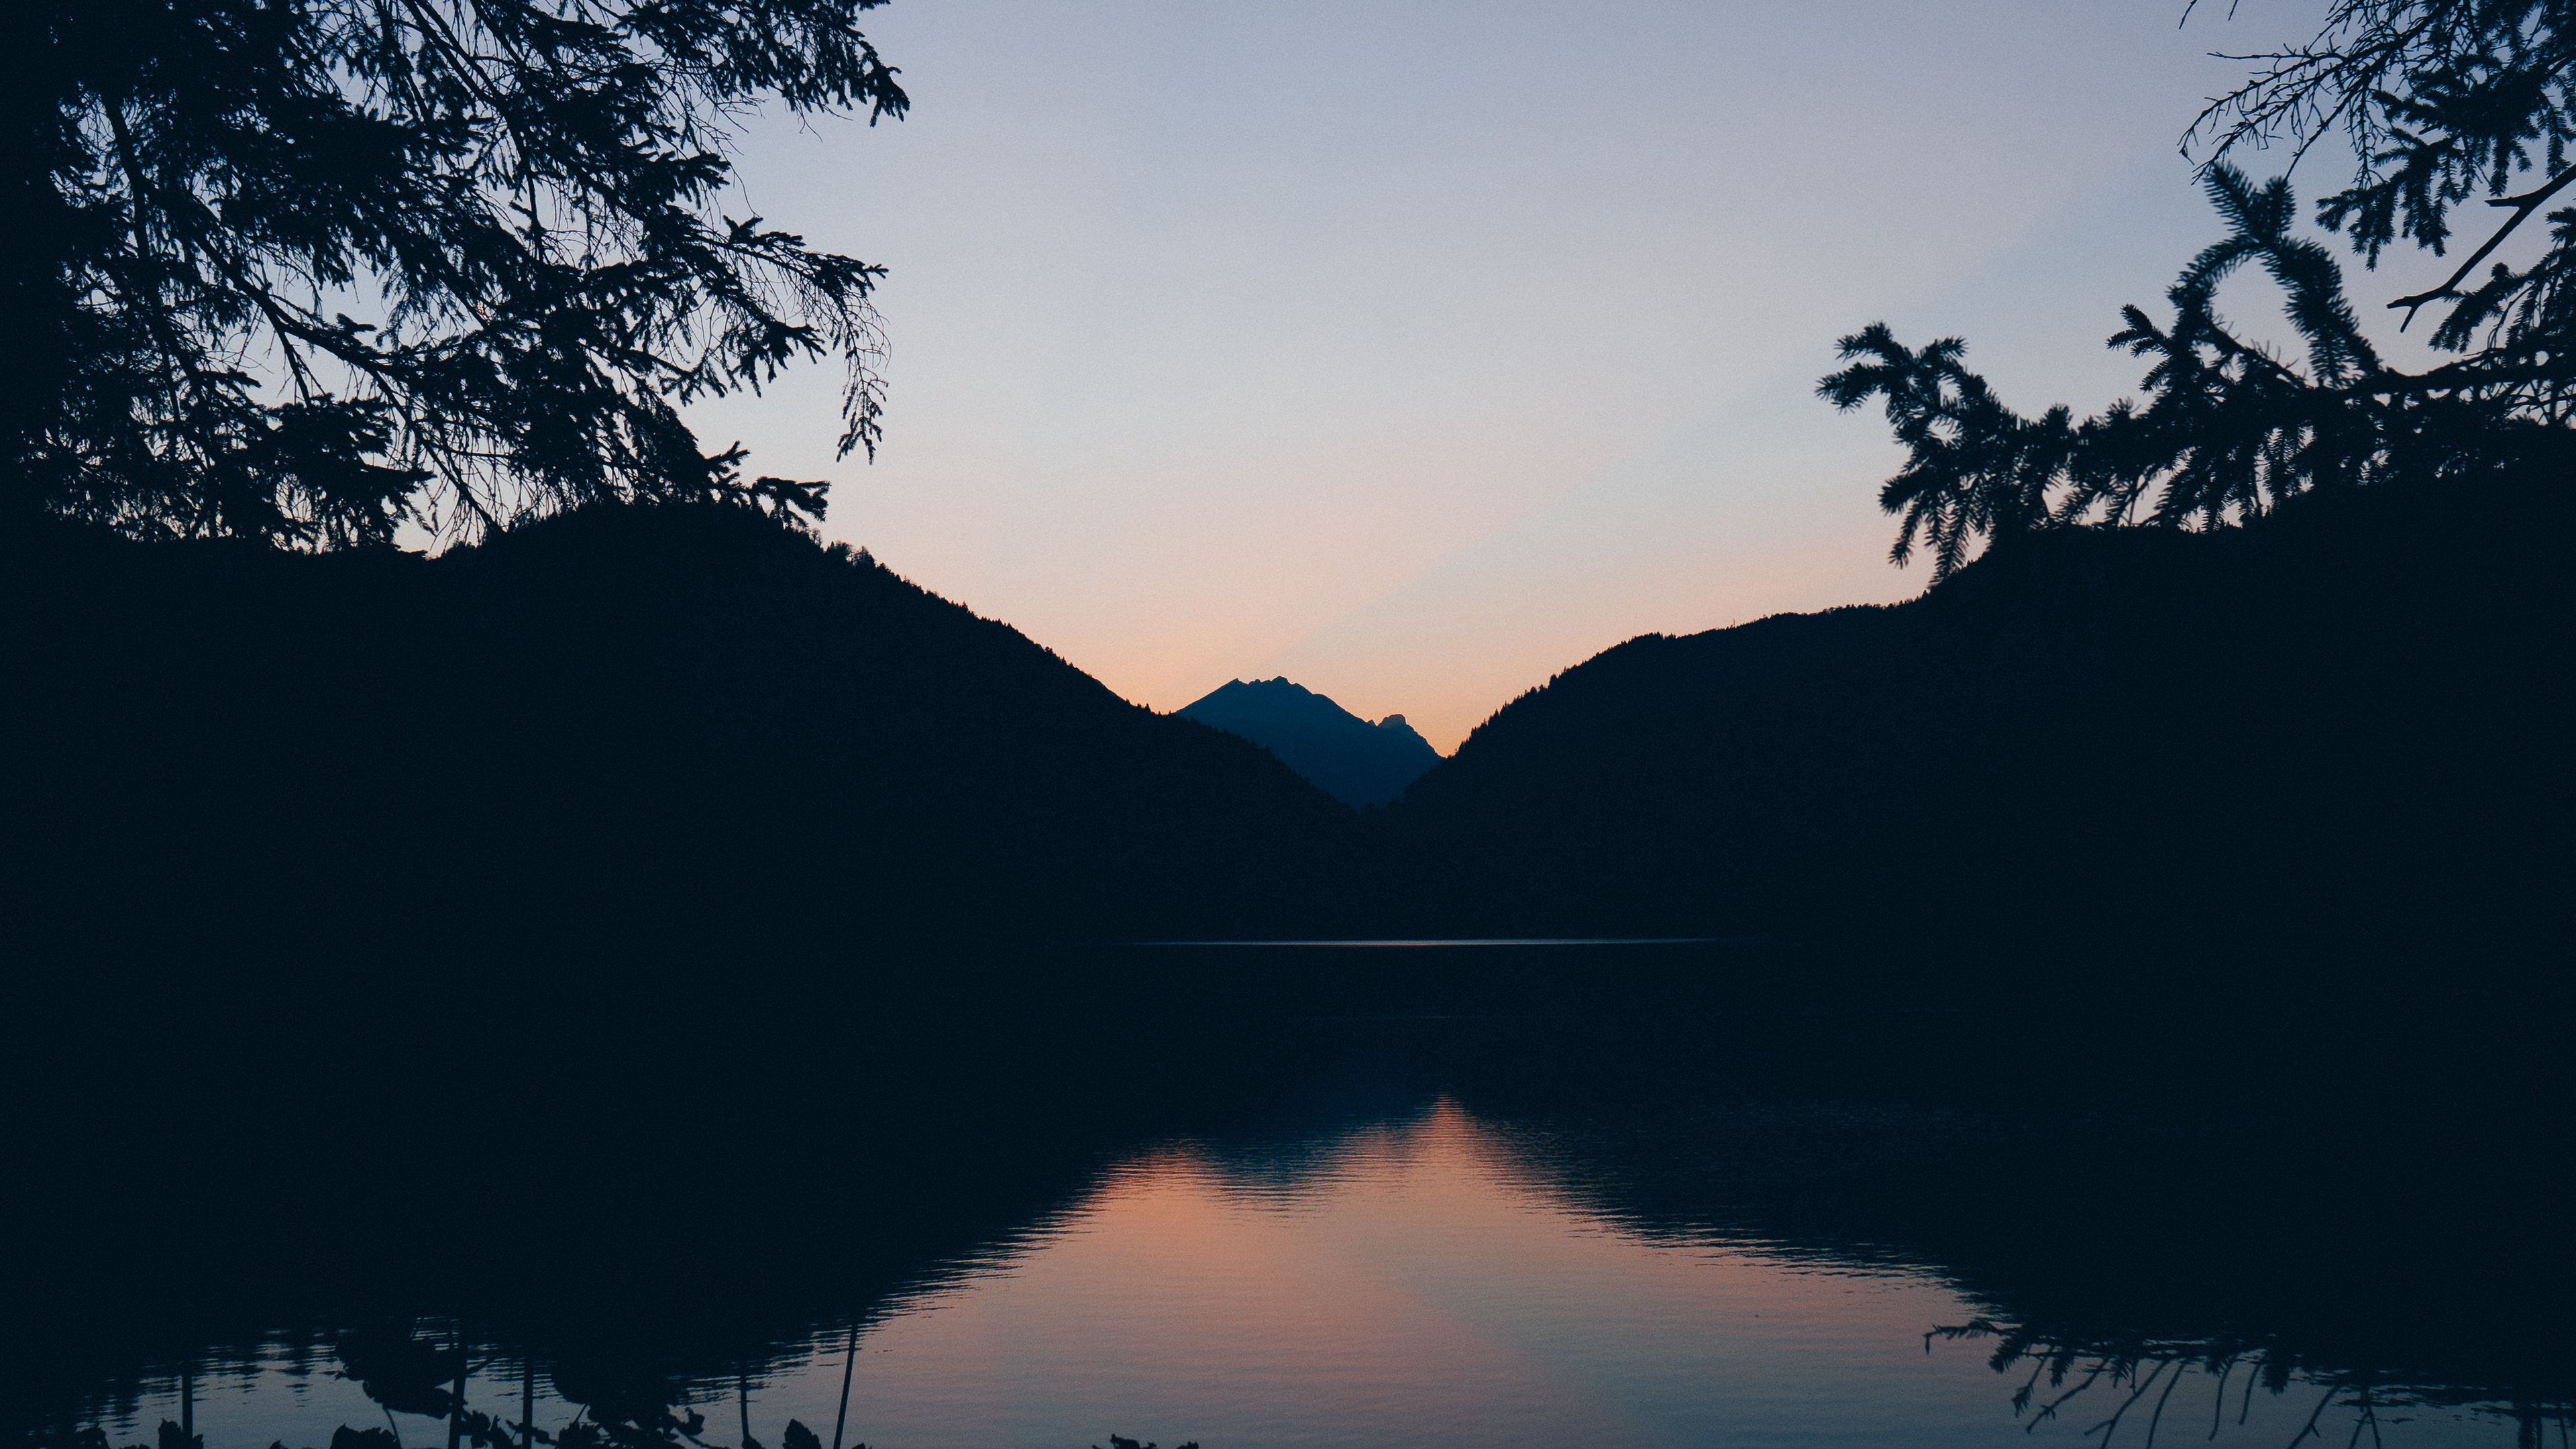 Download wallpaper 3840x2160 mountains, lake, twilight, reflection